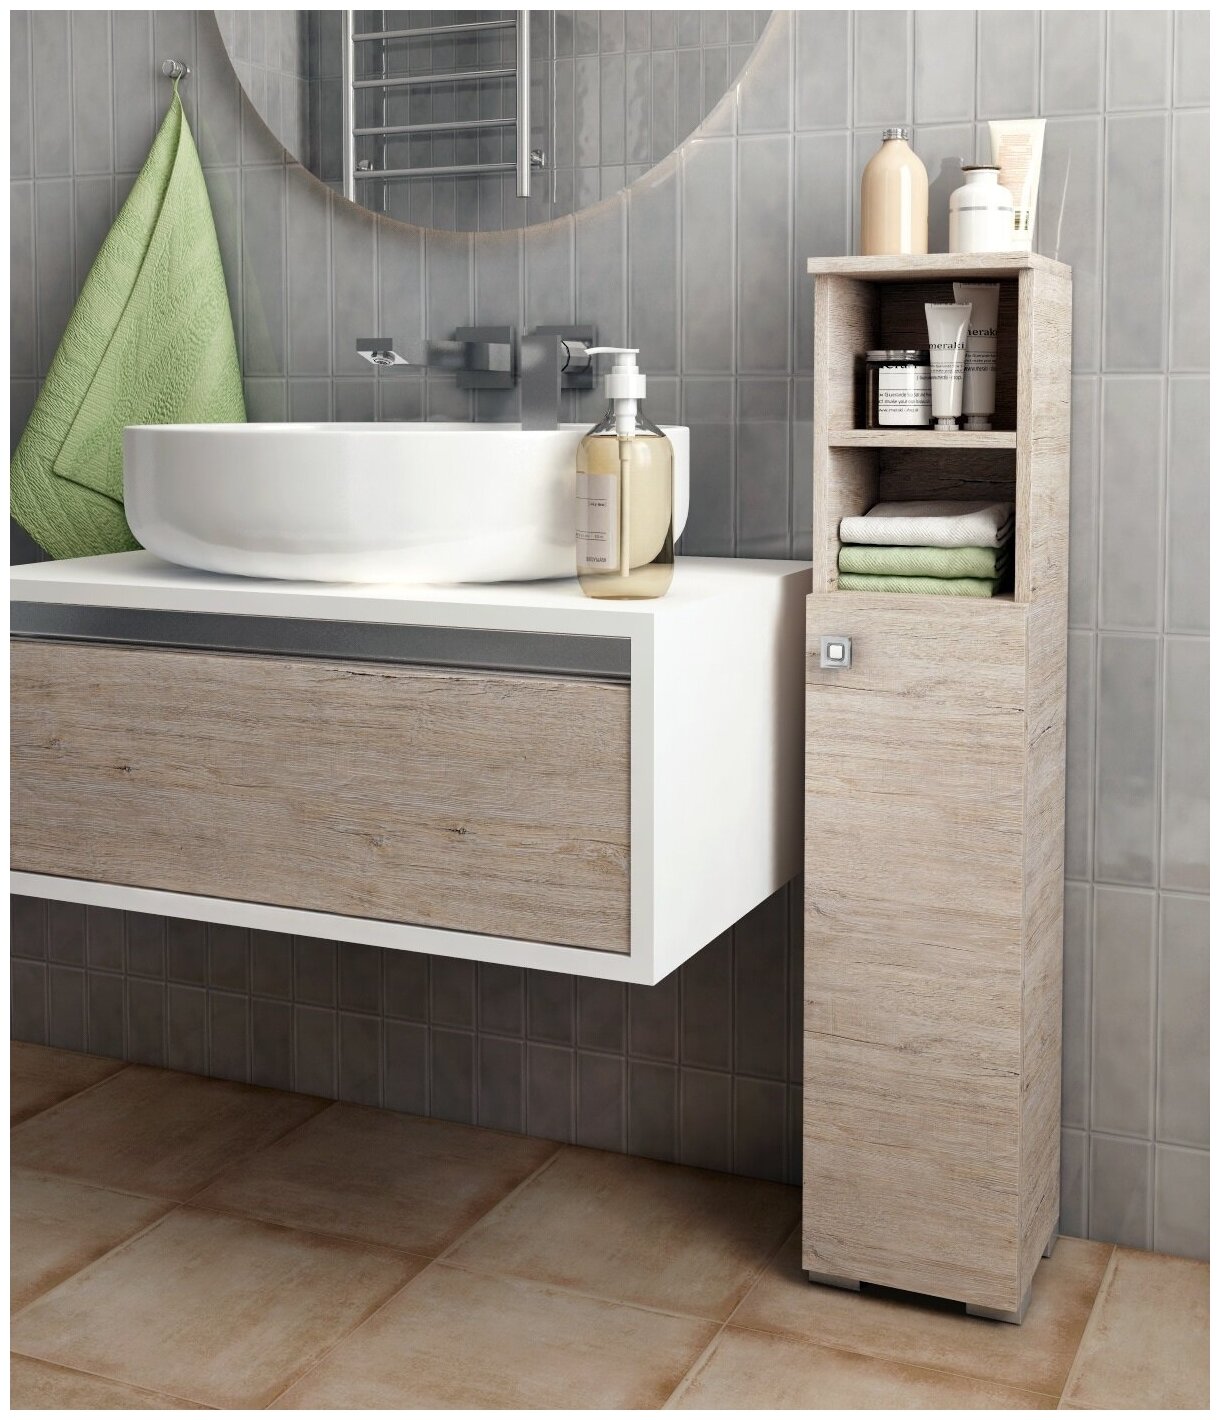 Шкаф для ванной комнаты, REGENT style, ШТВиола2н, цвет пикар, правый, 95*20*19